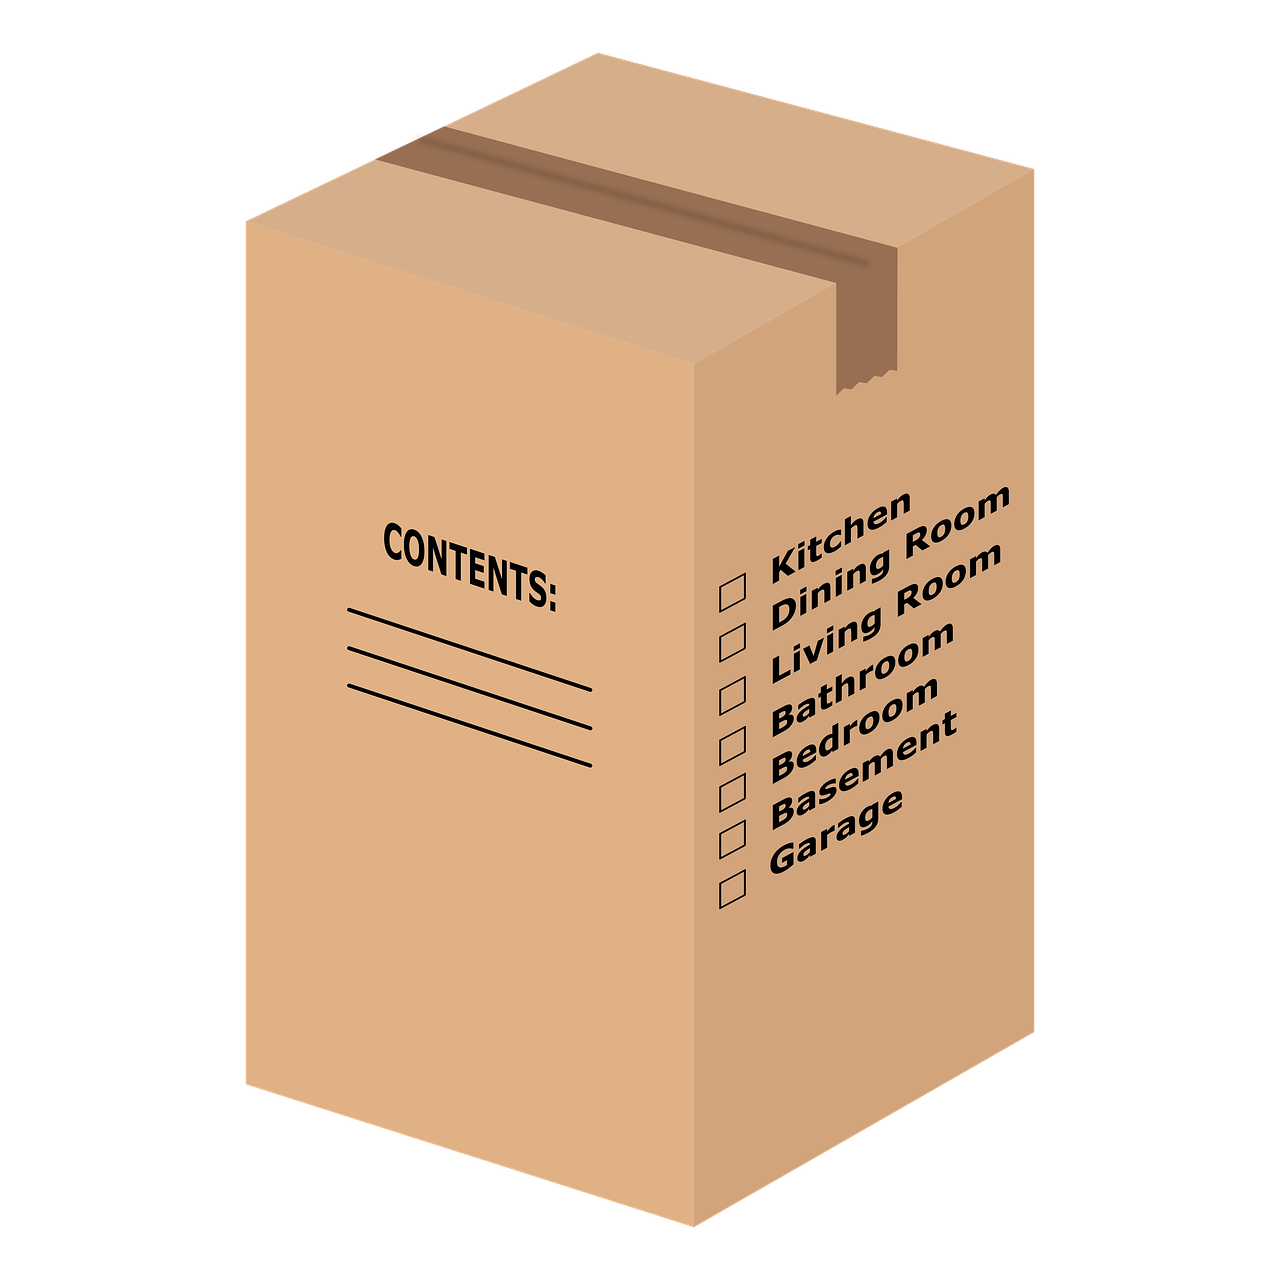 moving box, cardboard box, carton box-4115066.jpg